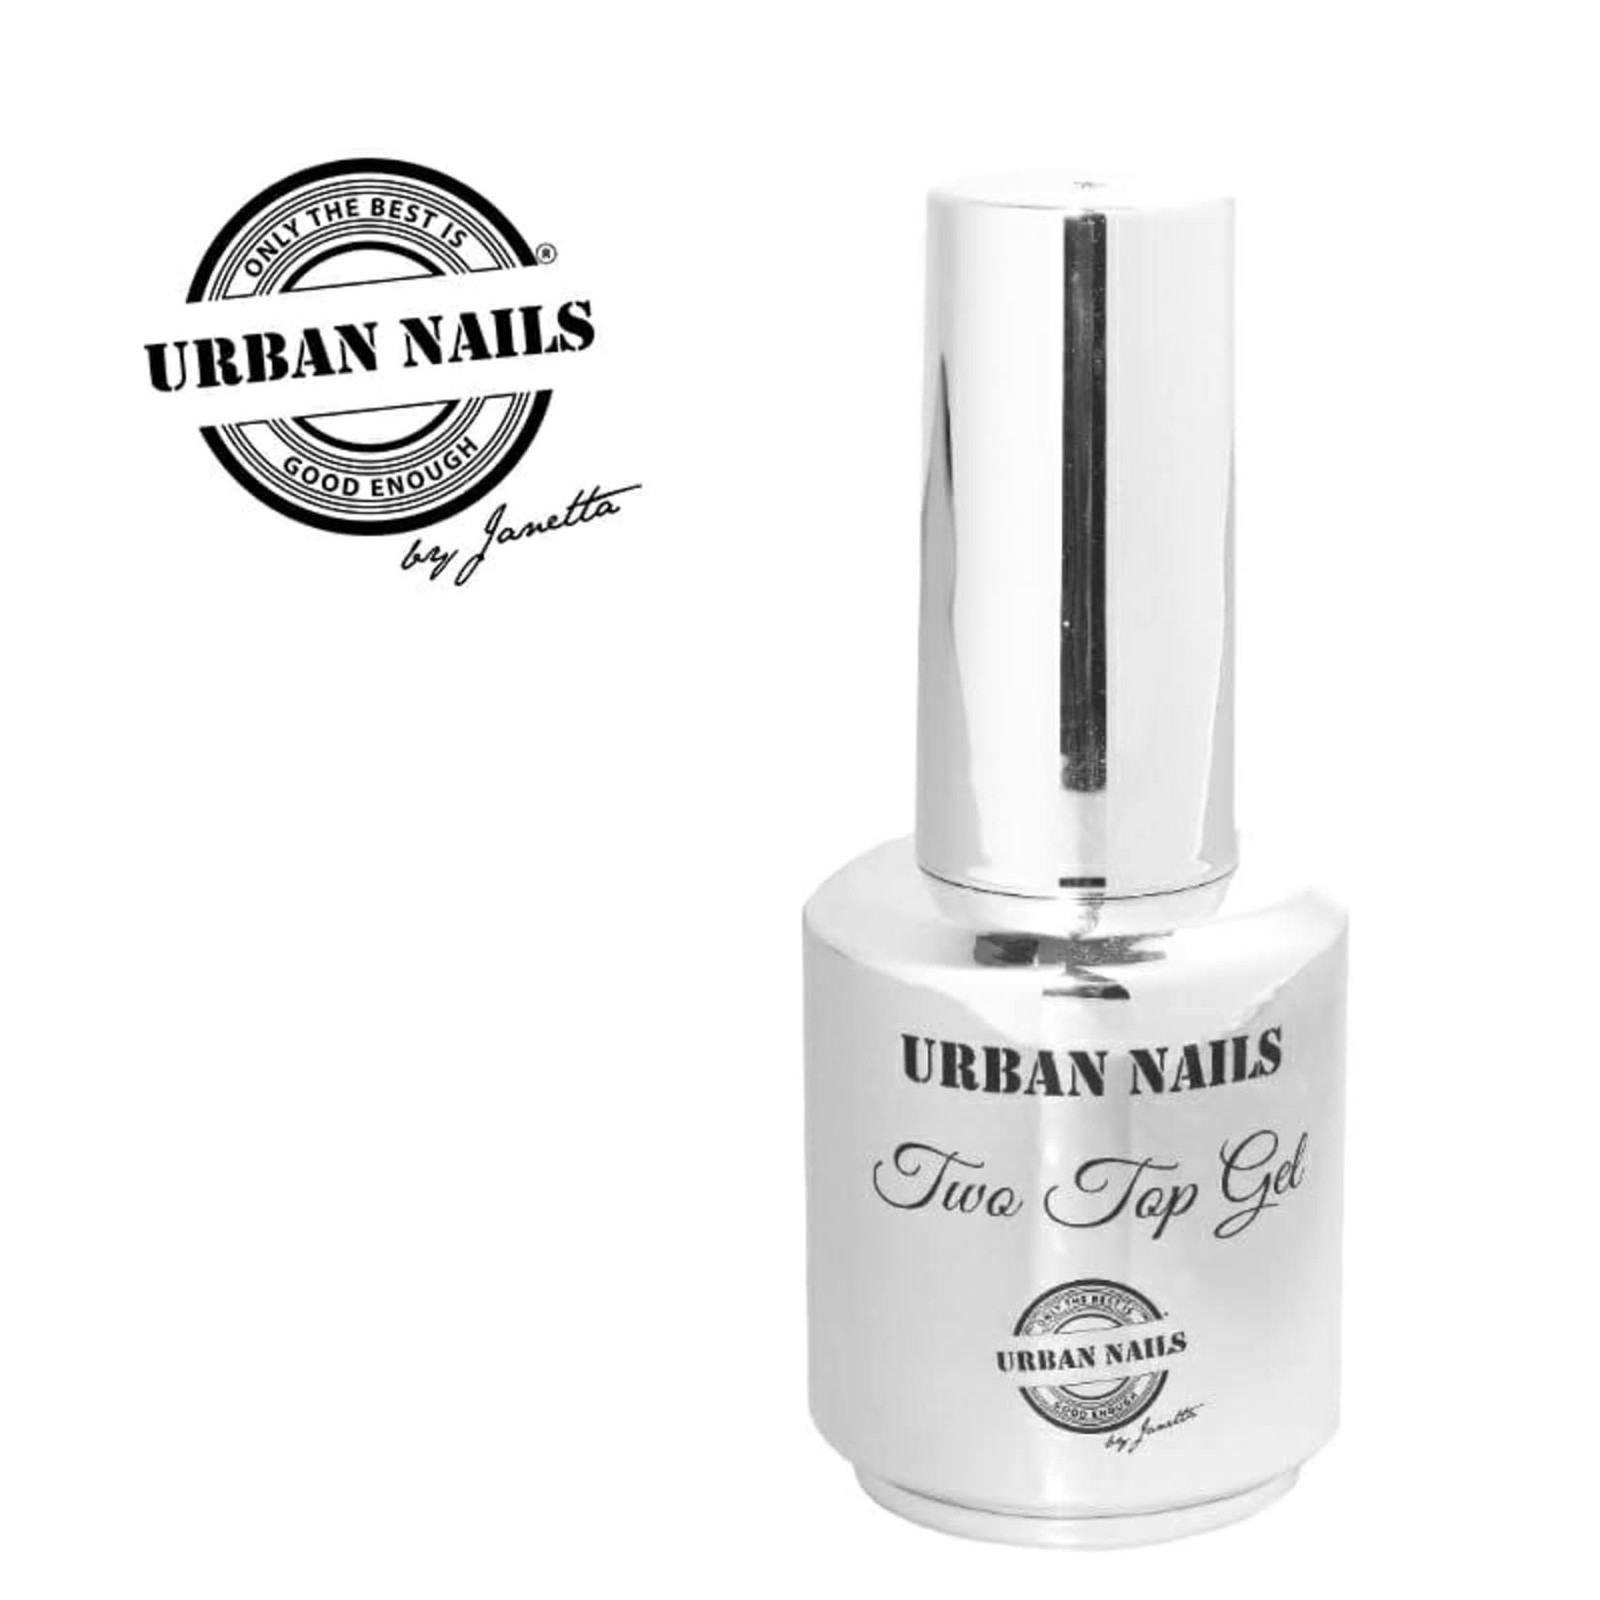 Urban nails Urban Nails Two Top Gel